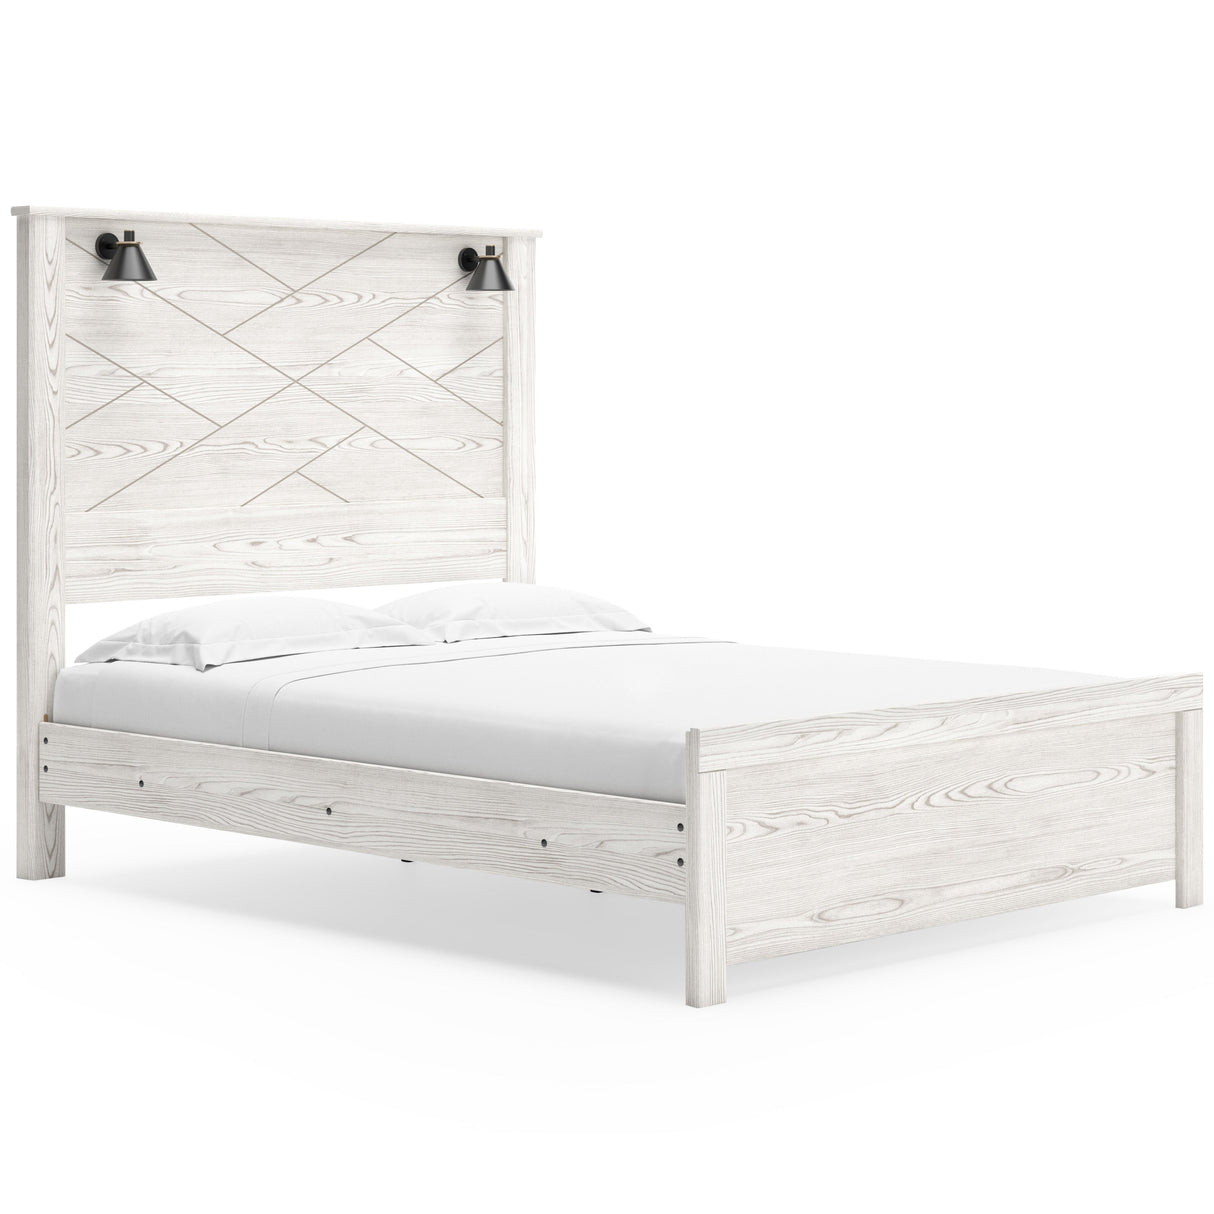 Gerridan White/Gray Lighted Panel Bedroom Set